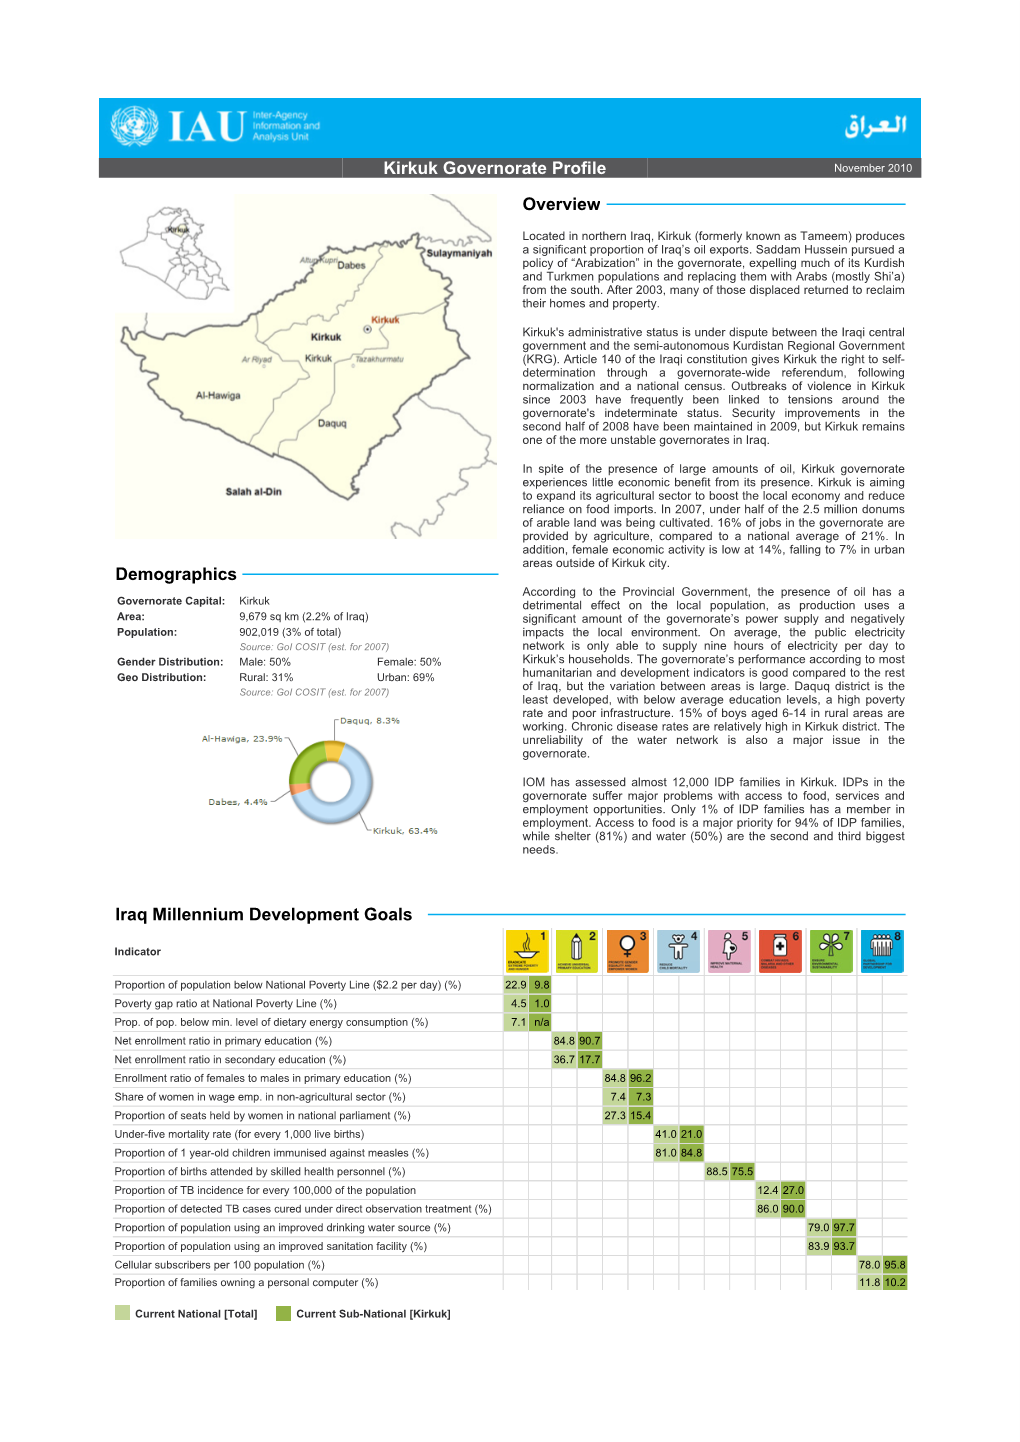 Kirkuk Governorate Profile Overview Demographics Iraq Millennium